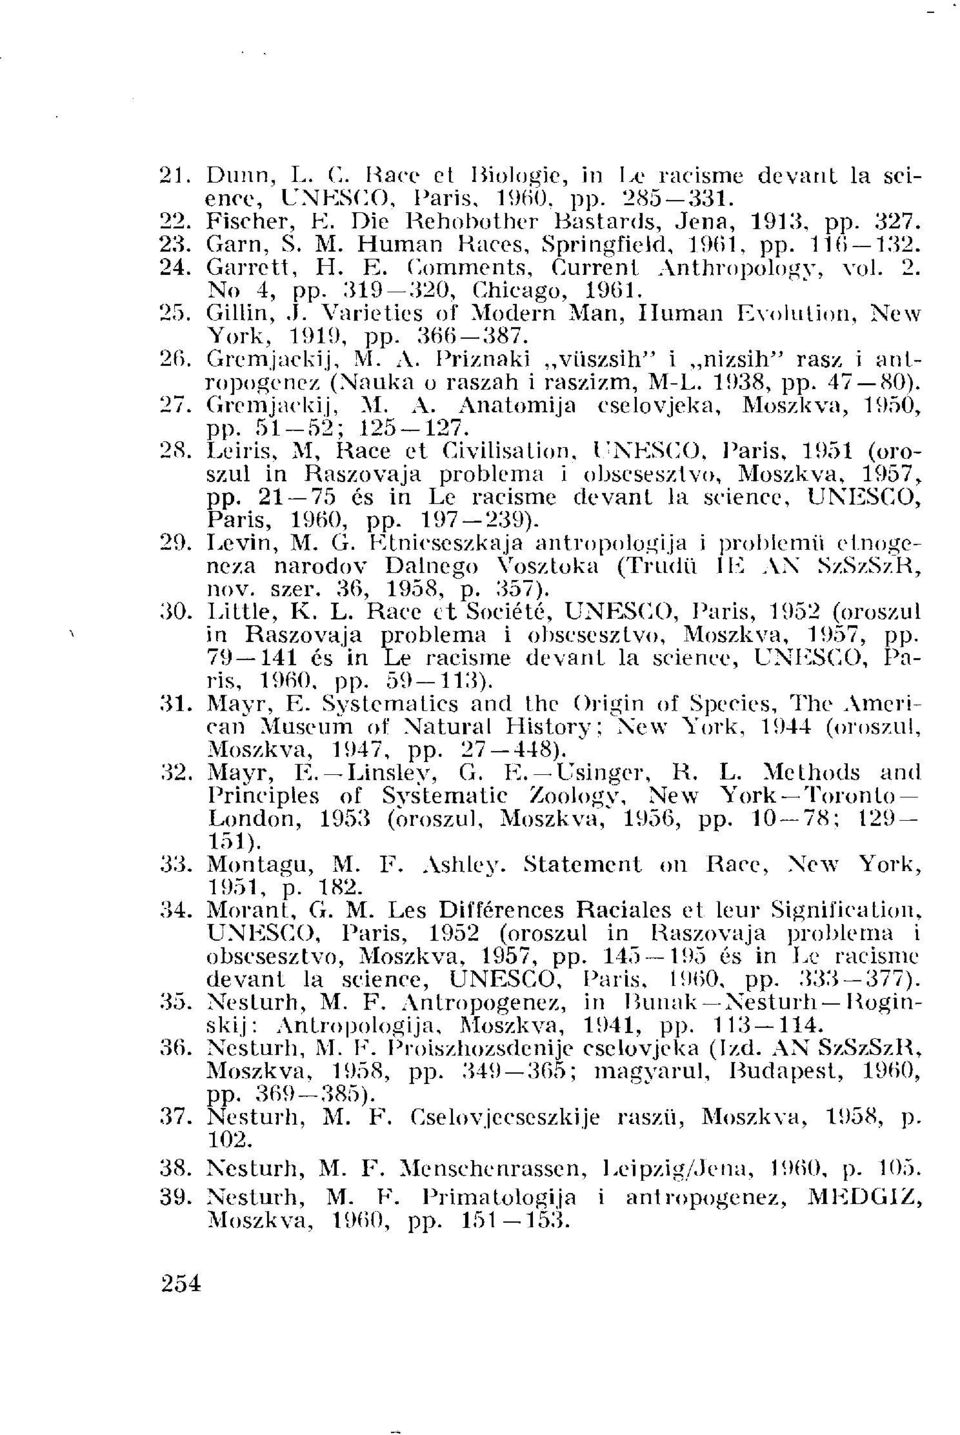 Varieties of Modern Man, Human Evolution, New York, 1919, pp. 366-387. 26. Gremjackij, M. A. Priznaki,,viiszsih" i,,nizsih" rasz i antropogenez (Nauka o raszah i raszizm, M-L. 1938, pp. 47 80). 27.